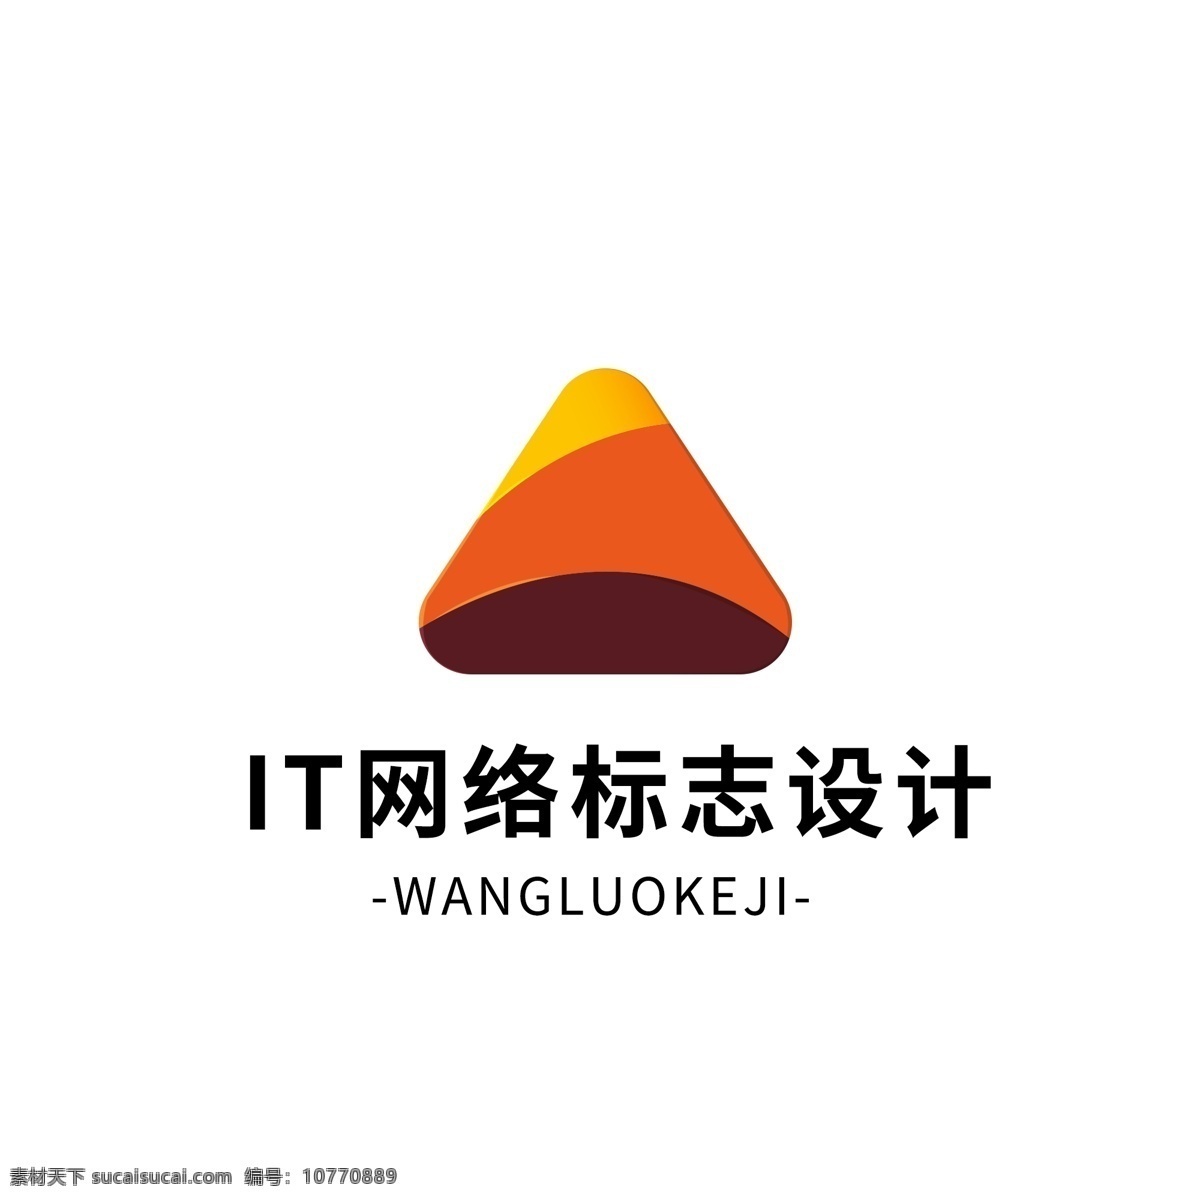 it 网络 标志设计 logo 简约 黄色 三角 图形 矢量